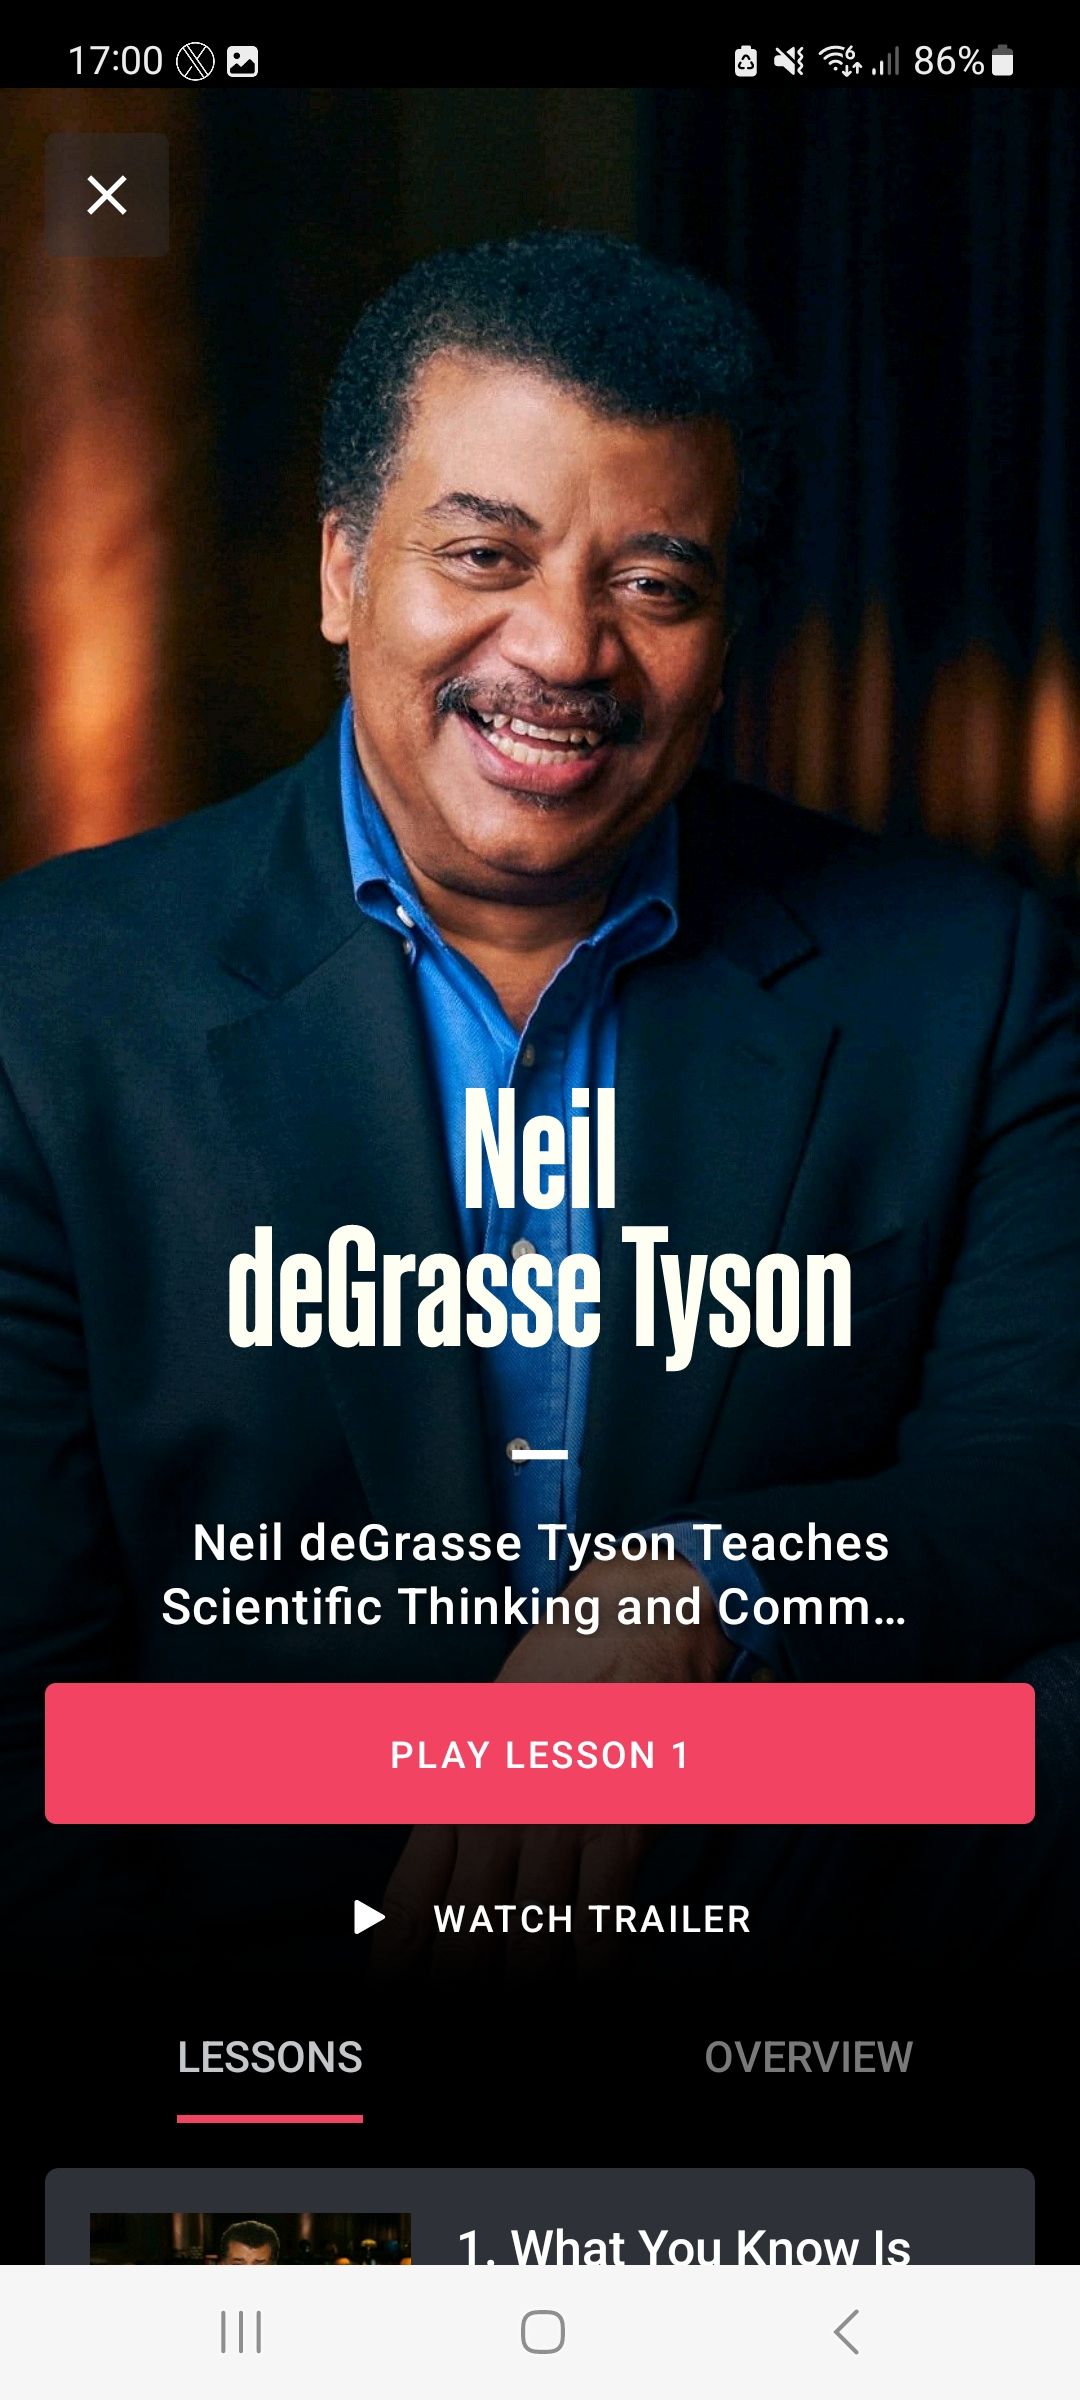 Neil deGrasse Tyson course on MasterClass